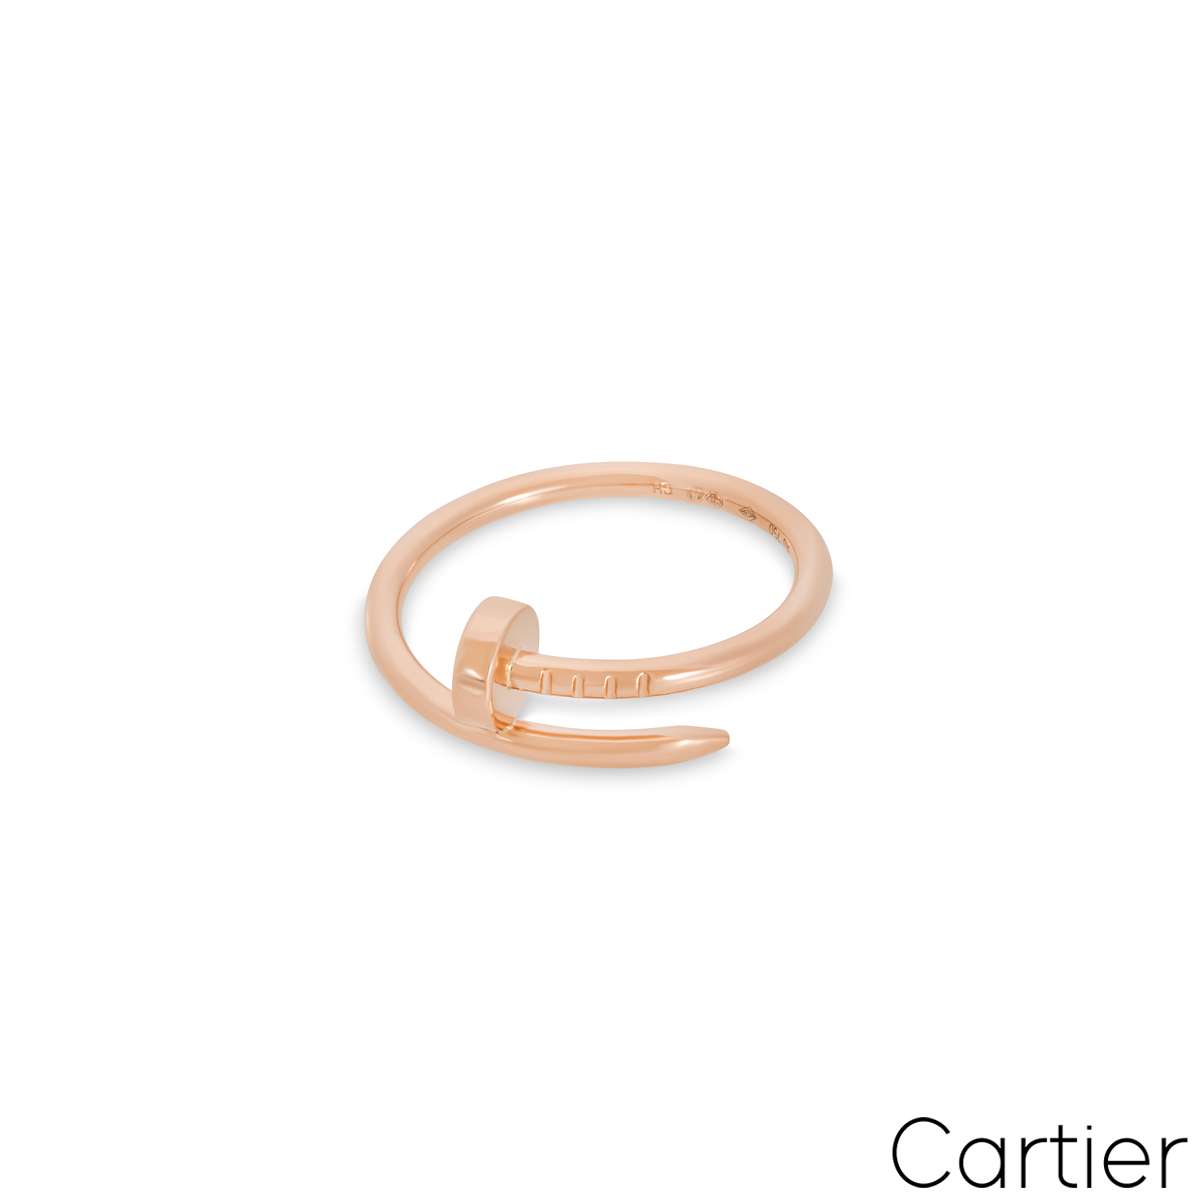 Cartier Rose Gold SM Juste Un Clou Ring Size 55 B4225800